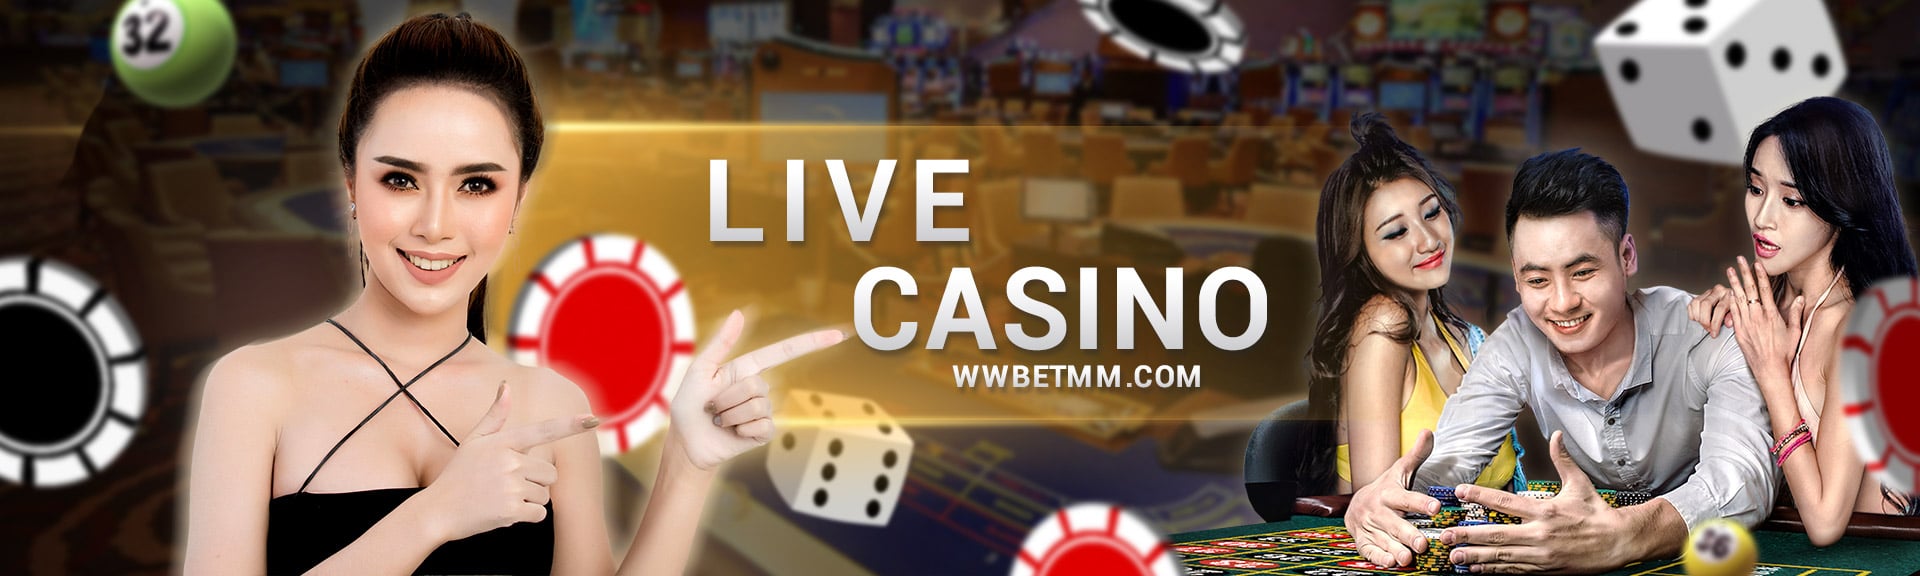 Live-Casino-Banner